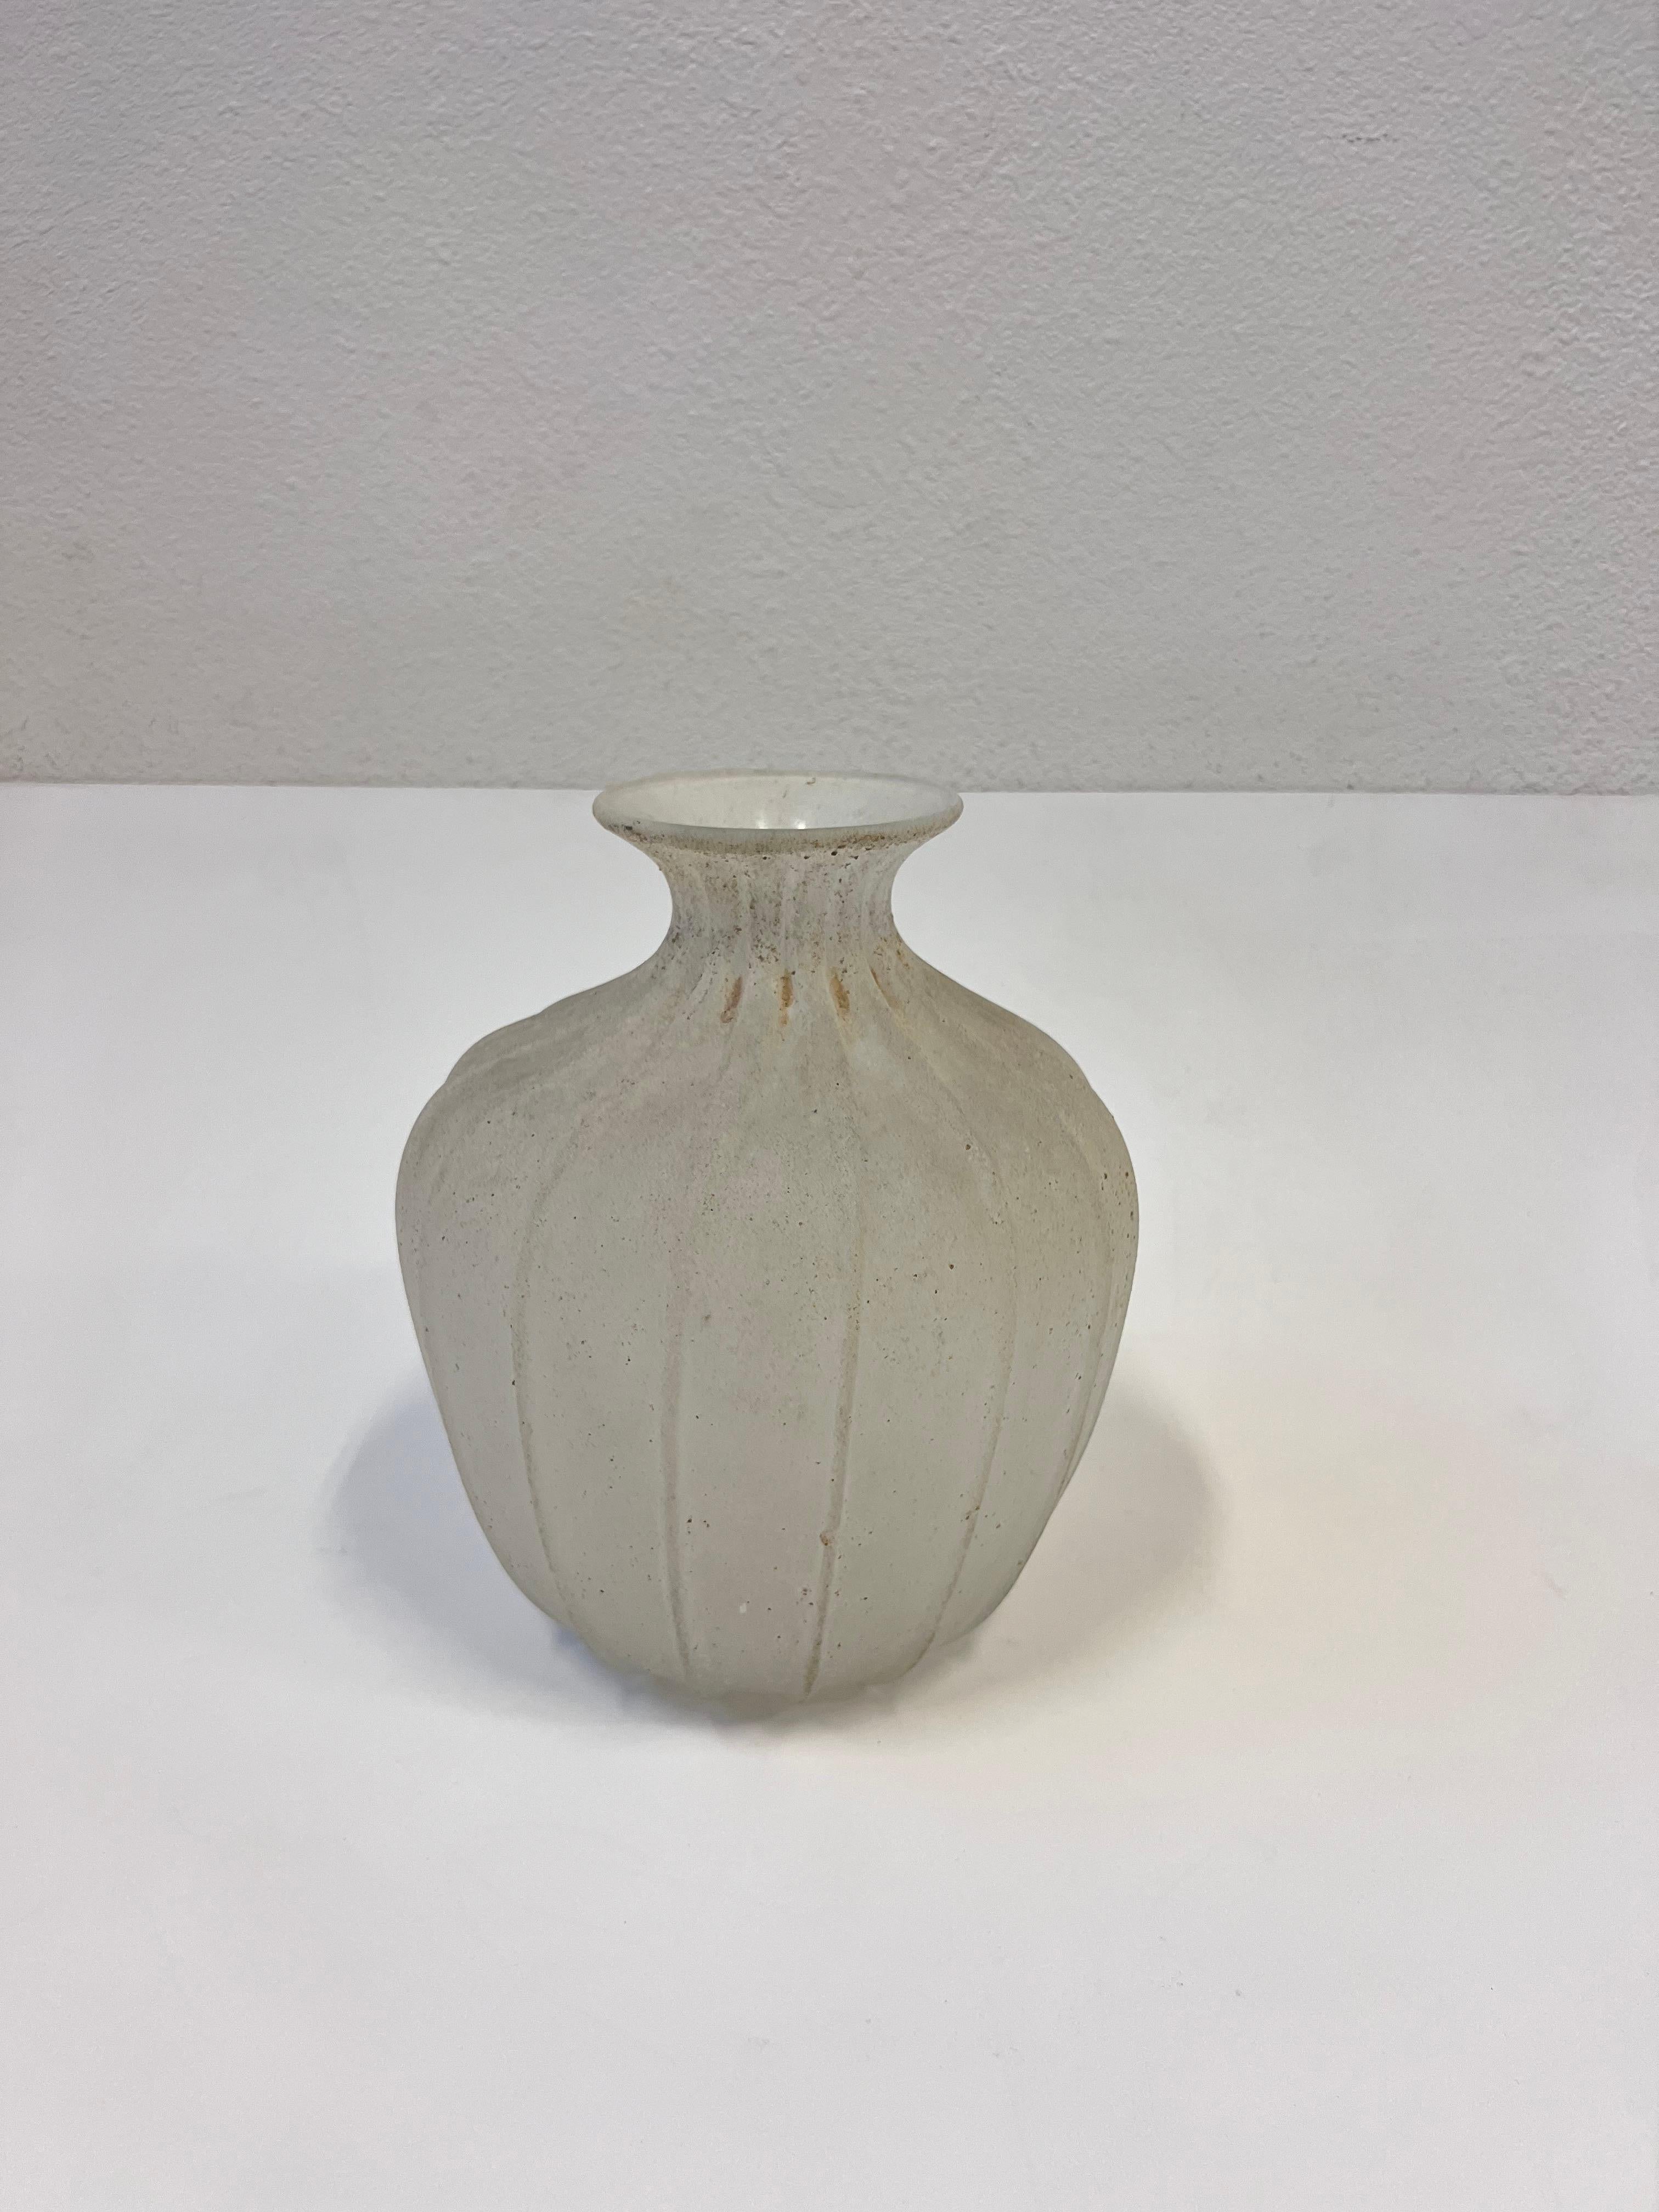 1980’s Italian Scavo Murano glass vase by Seguso Vetri d'Arte. 

Hand blown Murano glass with rough texture finish. The vase is marked Seguso Vetri d'Arte. 

Dim: 11” High, 10” Diameter. 